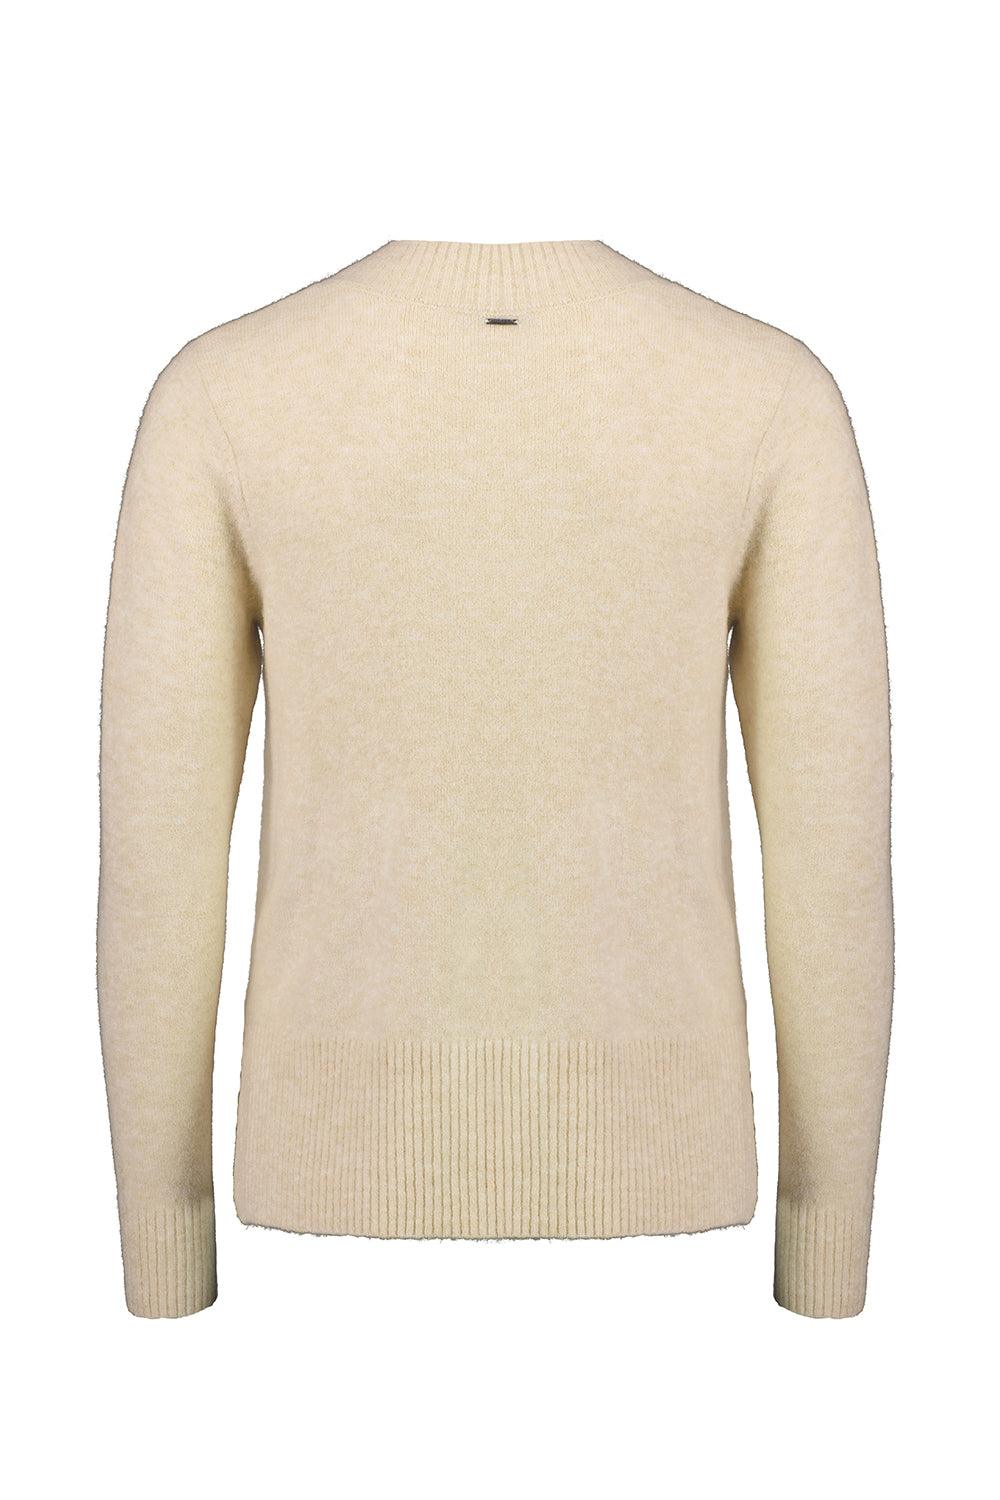 Cosmic Sweater - Chai - Sweater VERGE